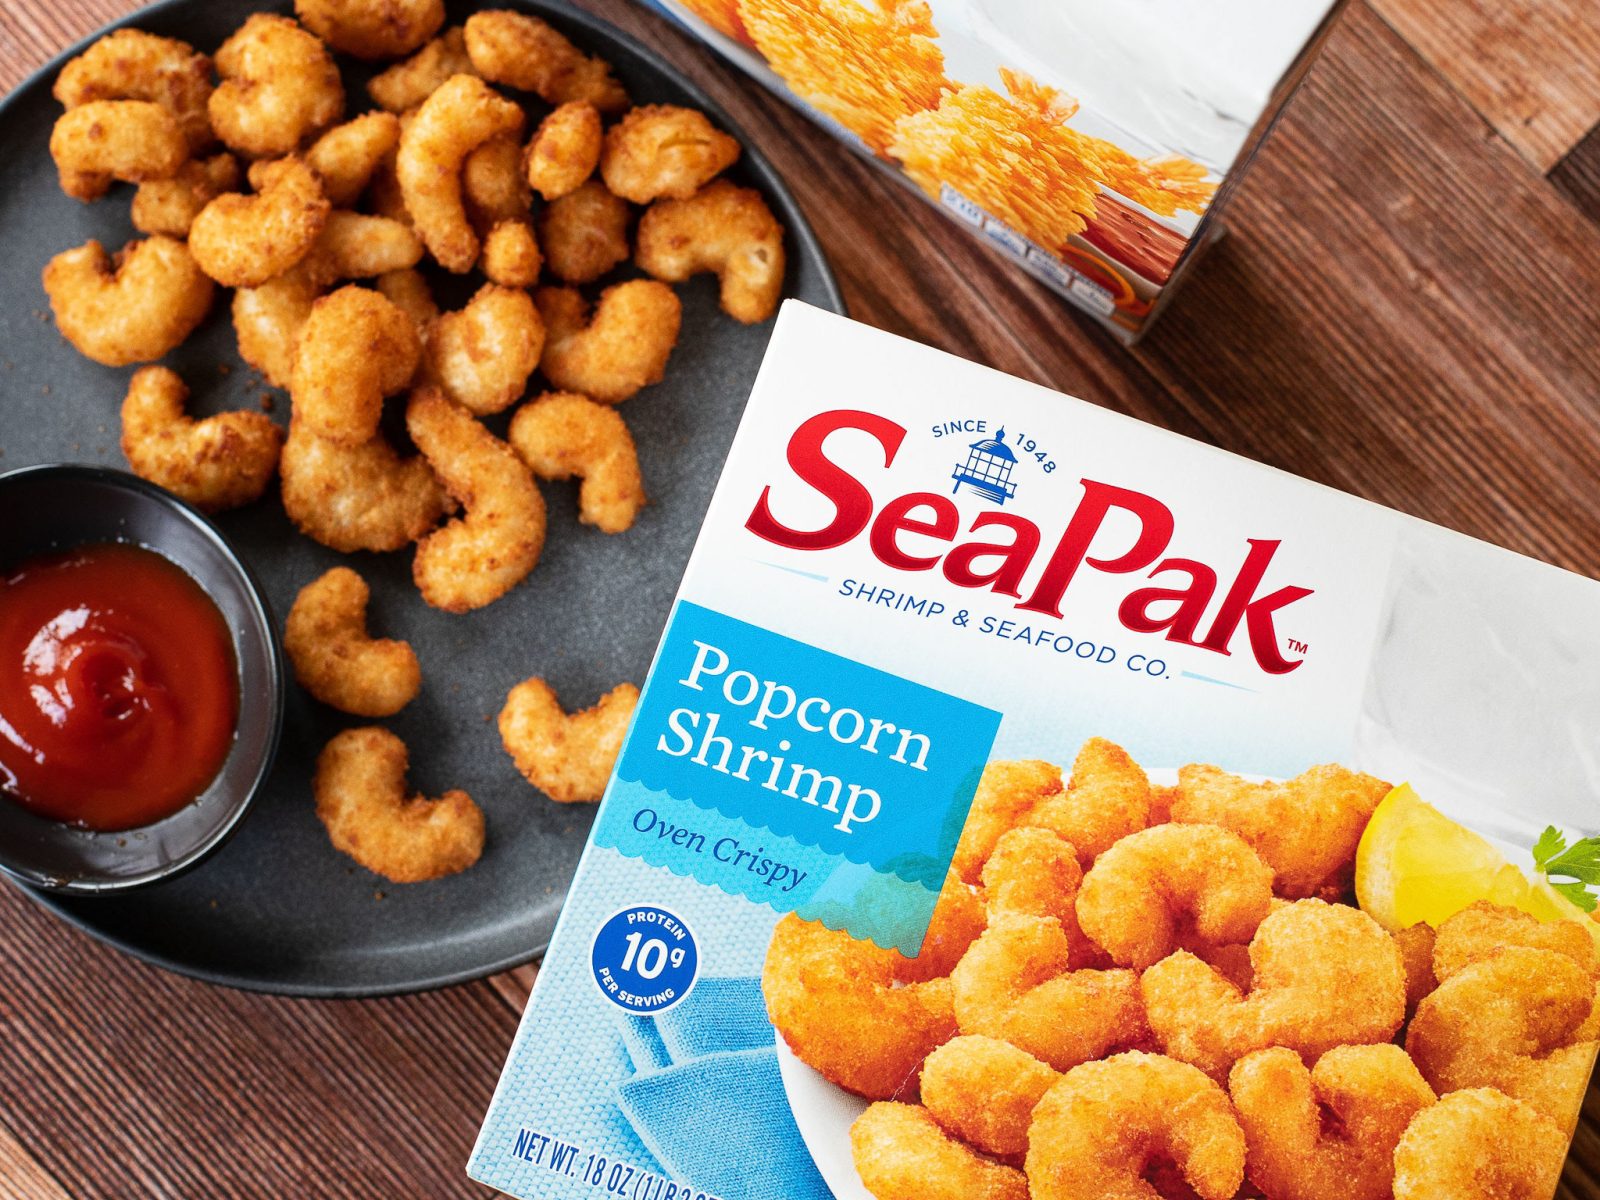 Get SeaPak Frozen Seafood As Low As $3.90 At Publix